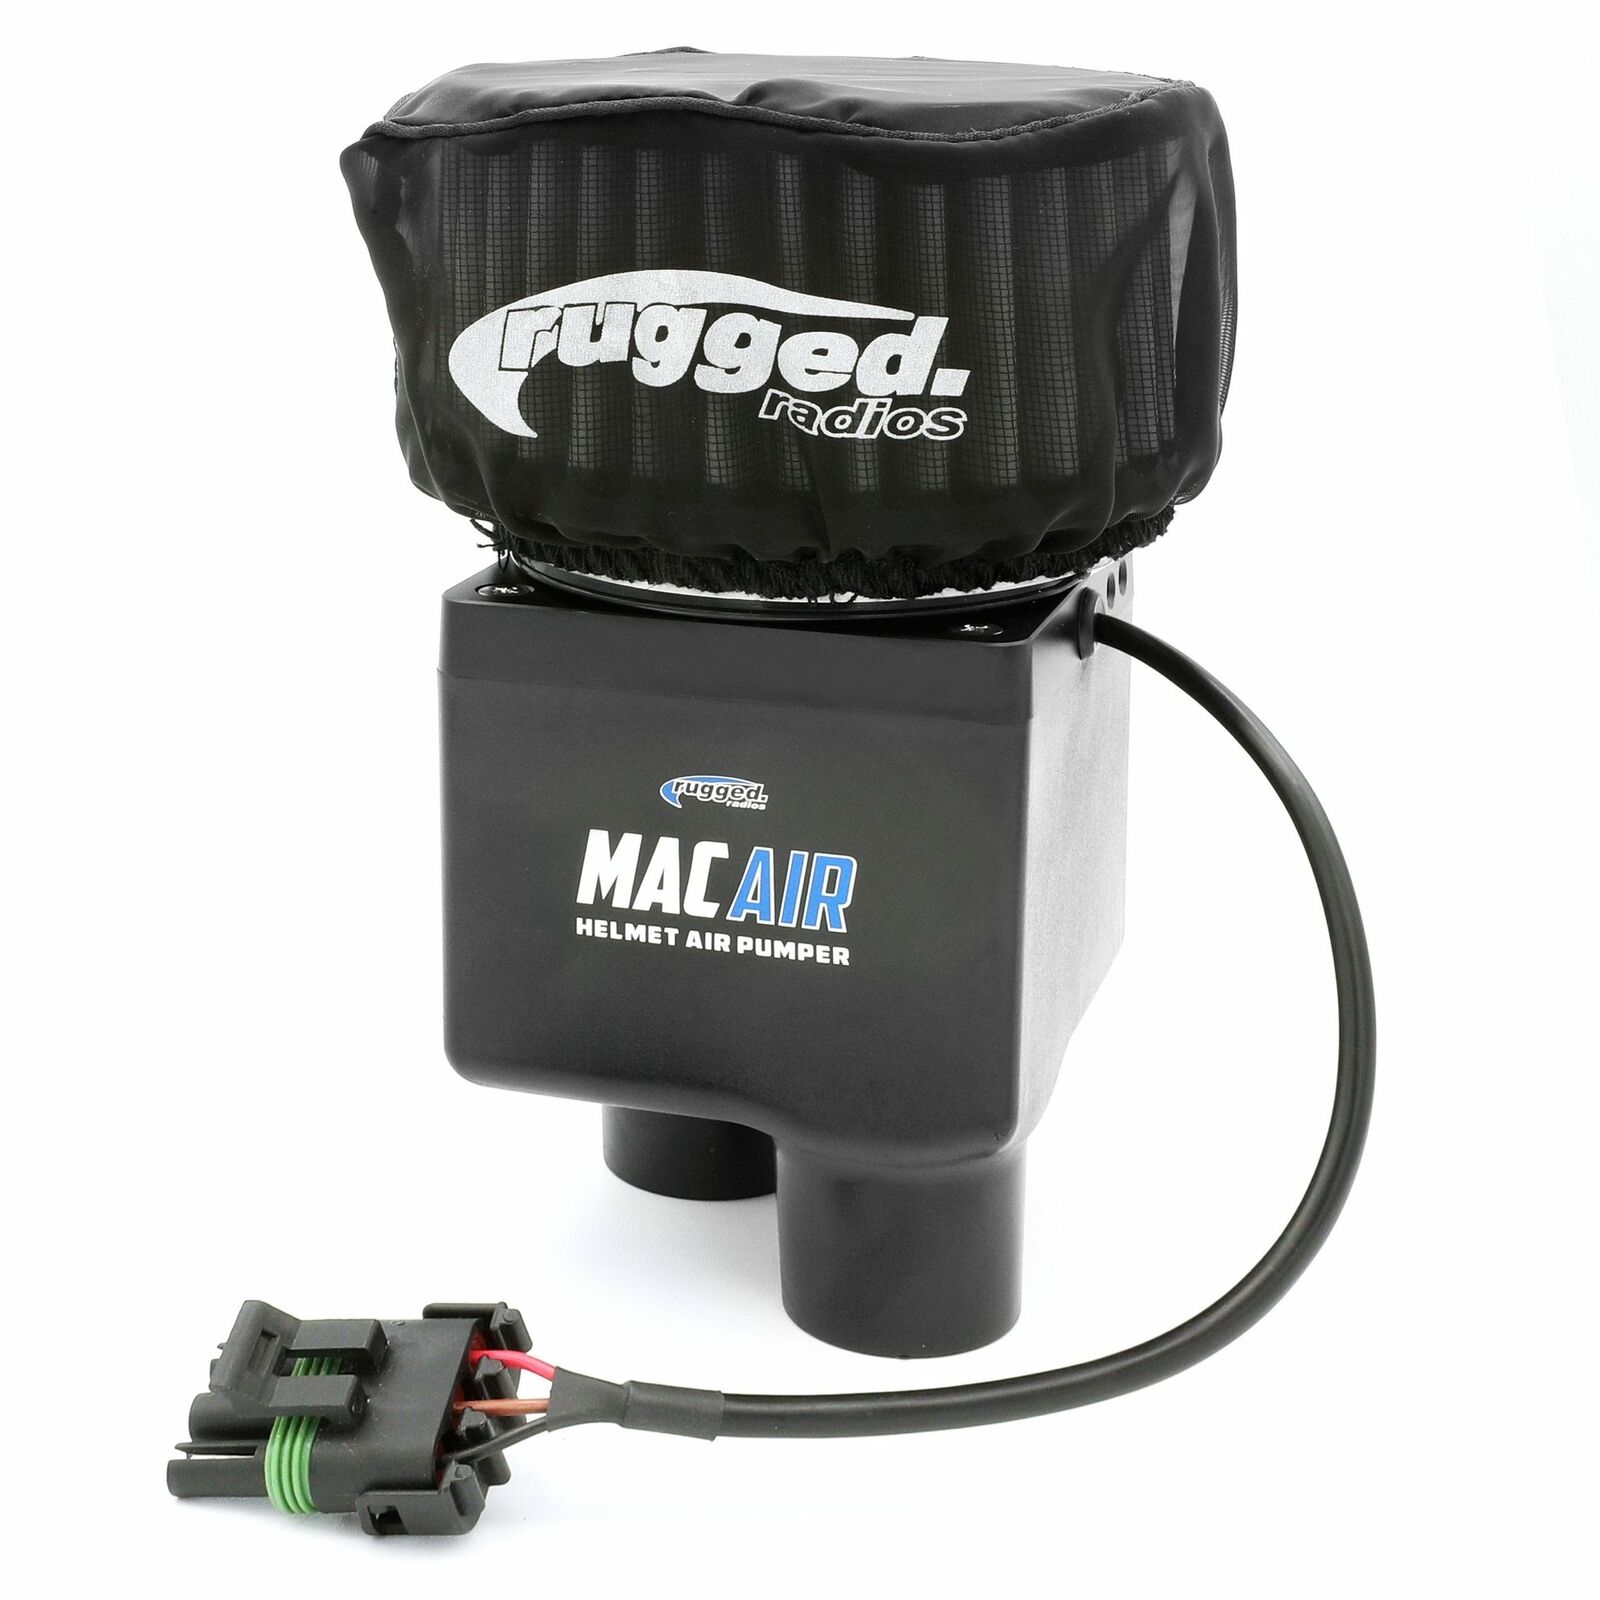 2 Person MAC Air Pumper Only - High Volume Helmet Air Pumper Blower System